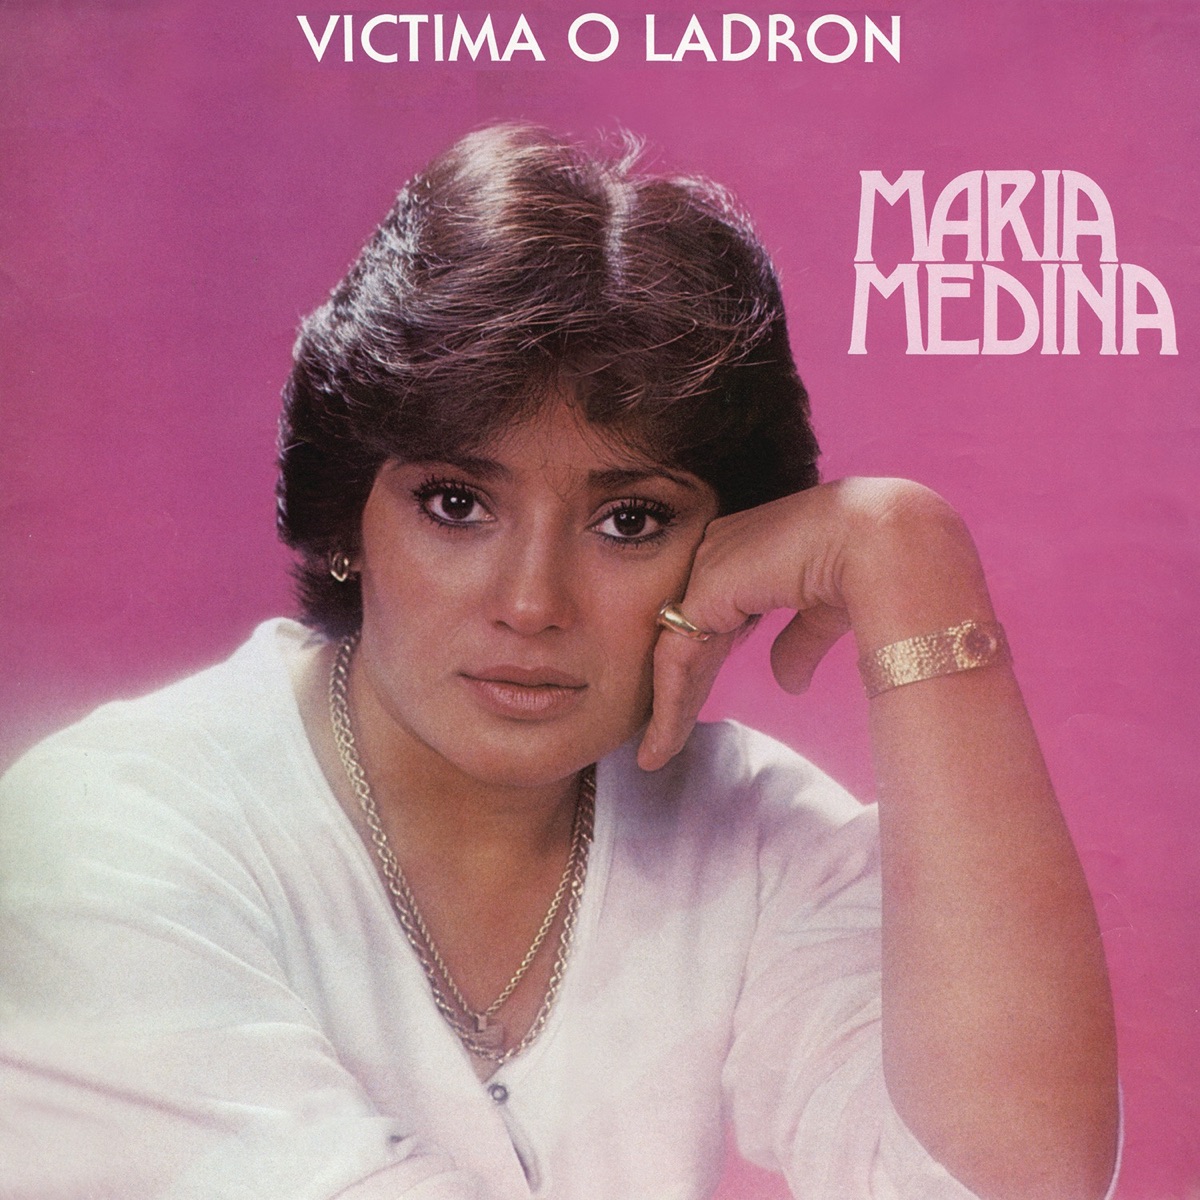 María Medina - Víctima o Ladrón - Reviews - Album of The Year